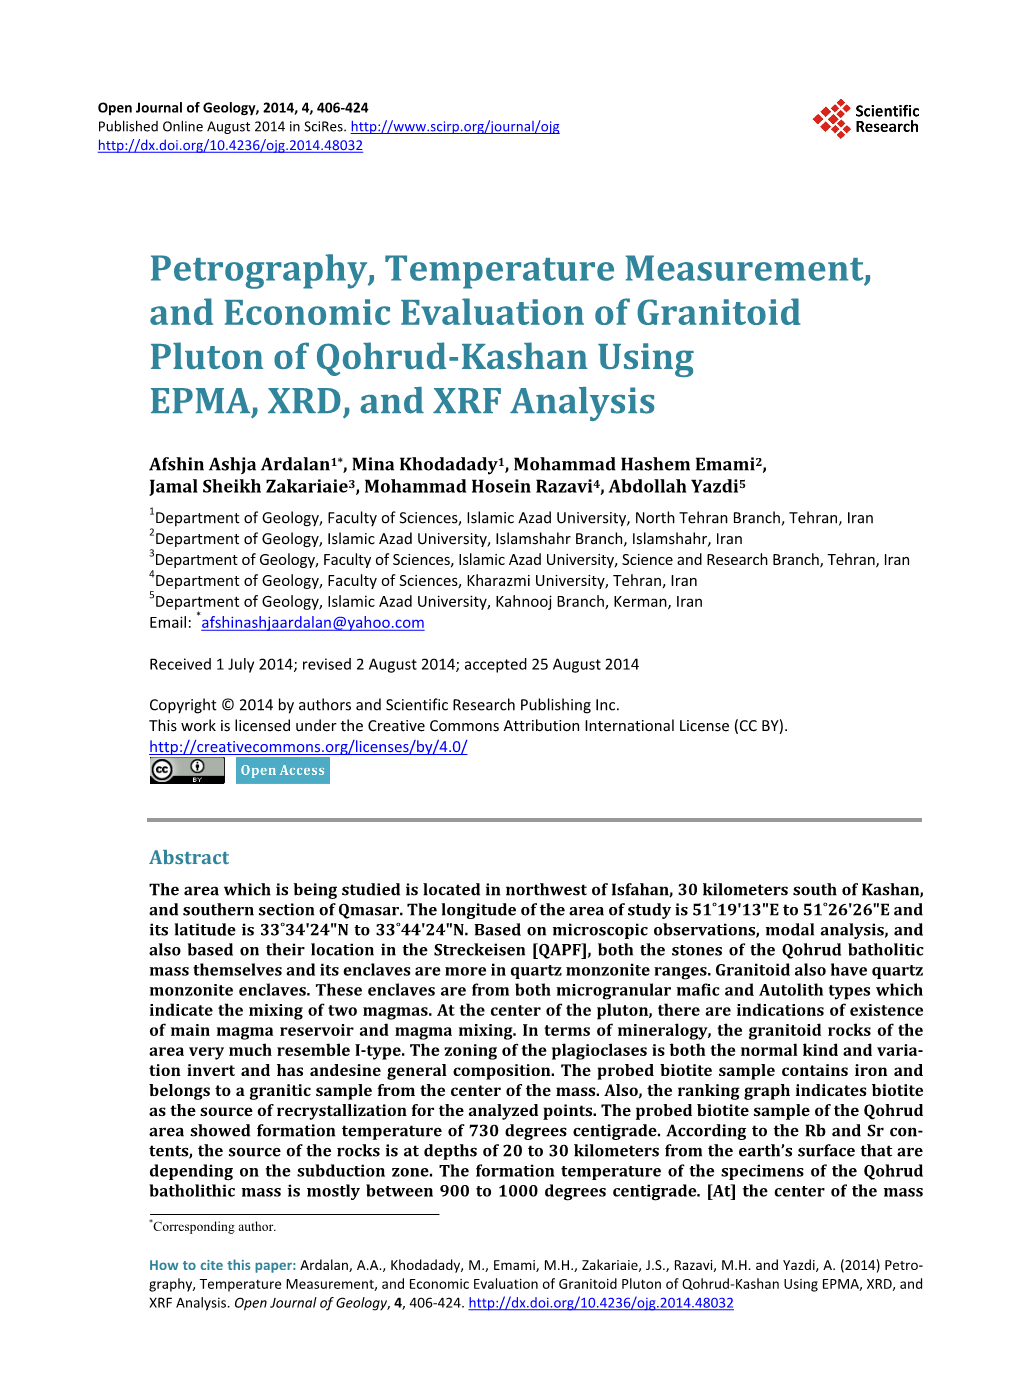 Petrography, Temperature Measurement, and Economic Evaluation of Granitoid Pluton of Qohrud-Kashan Using EPMA, XRD, and XRF Analysis